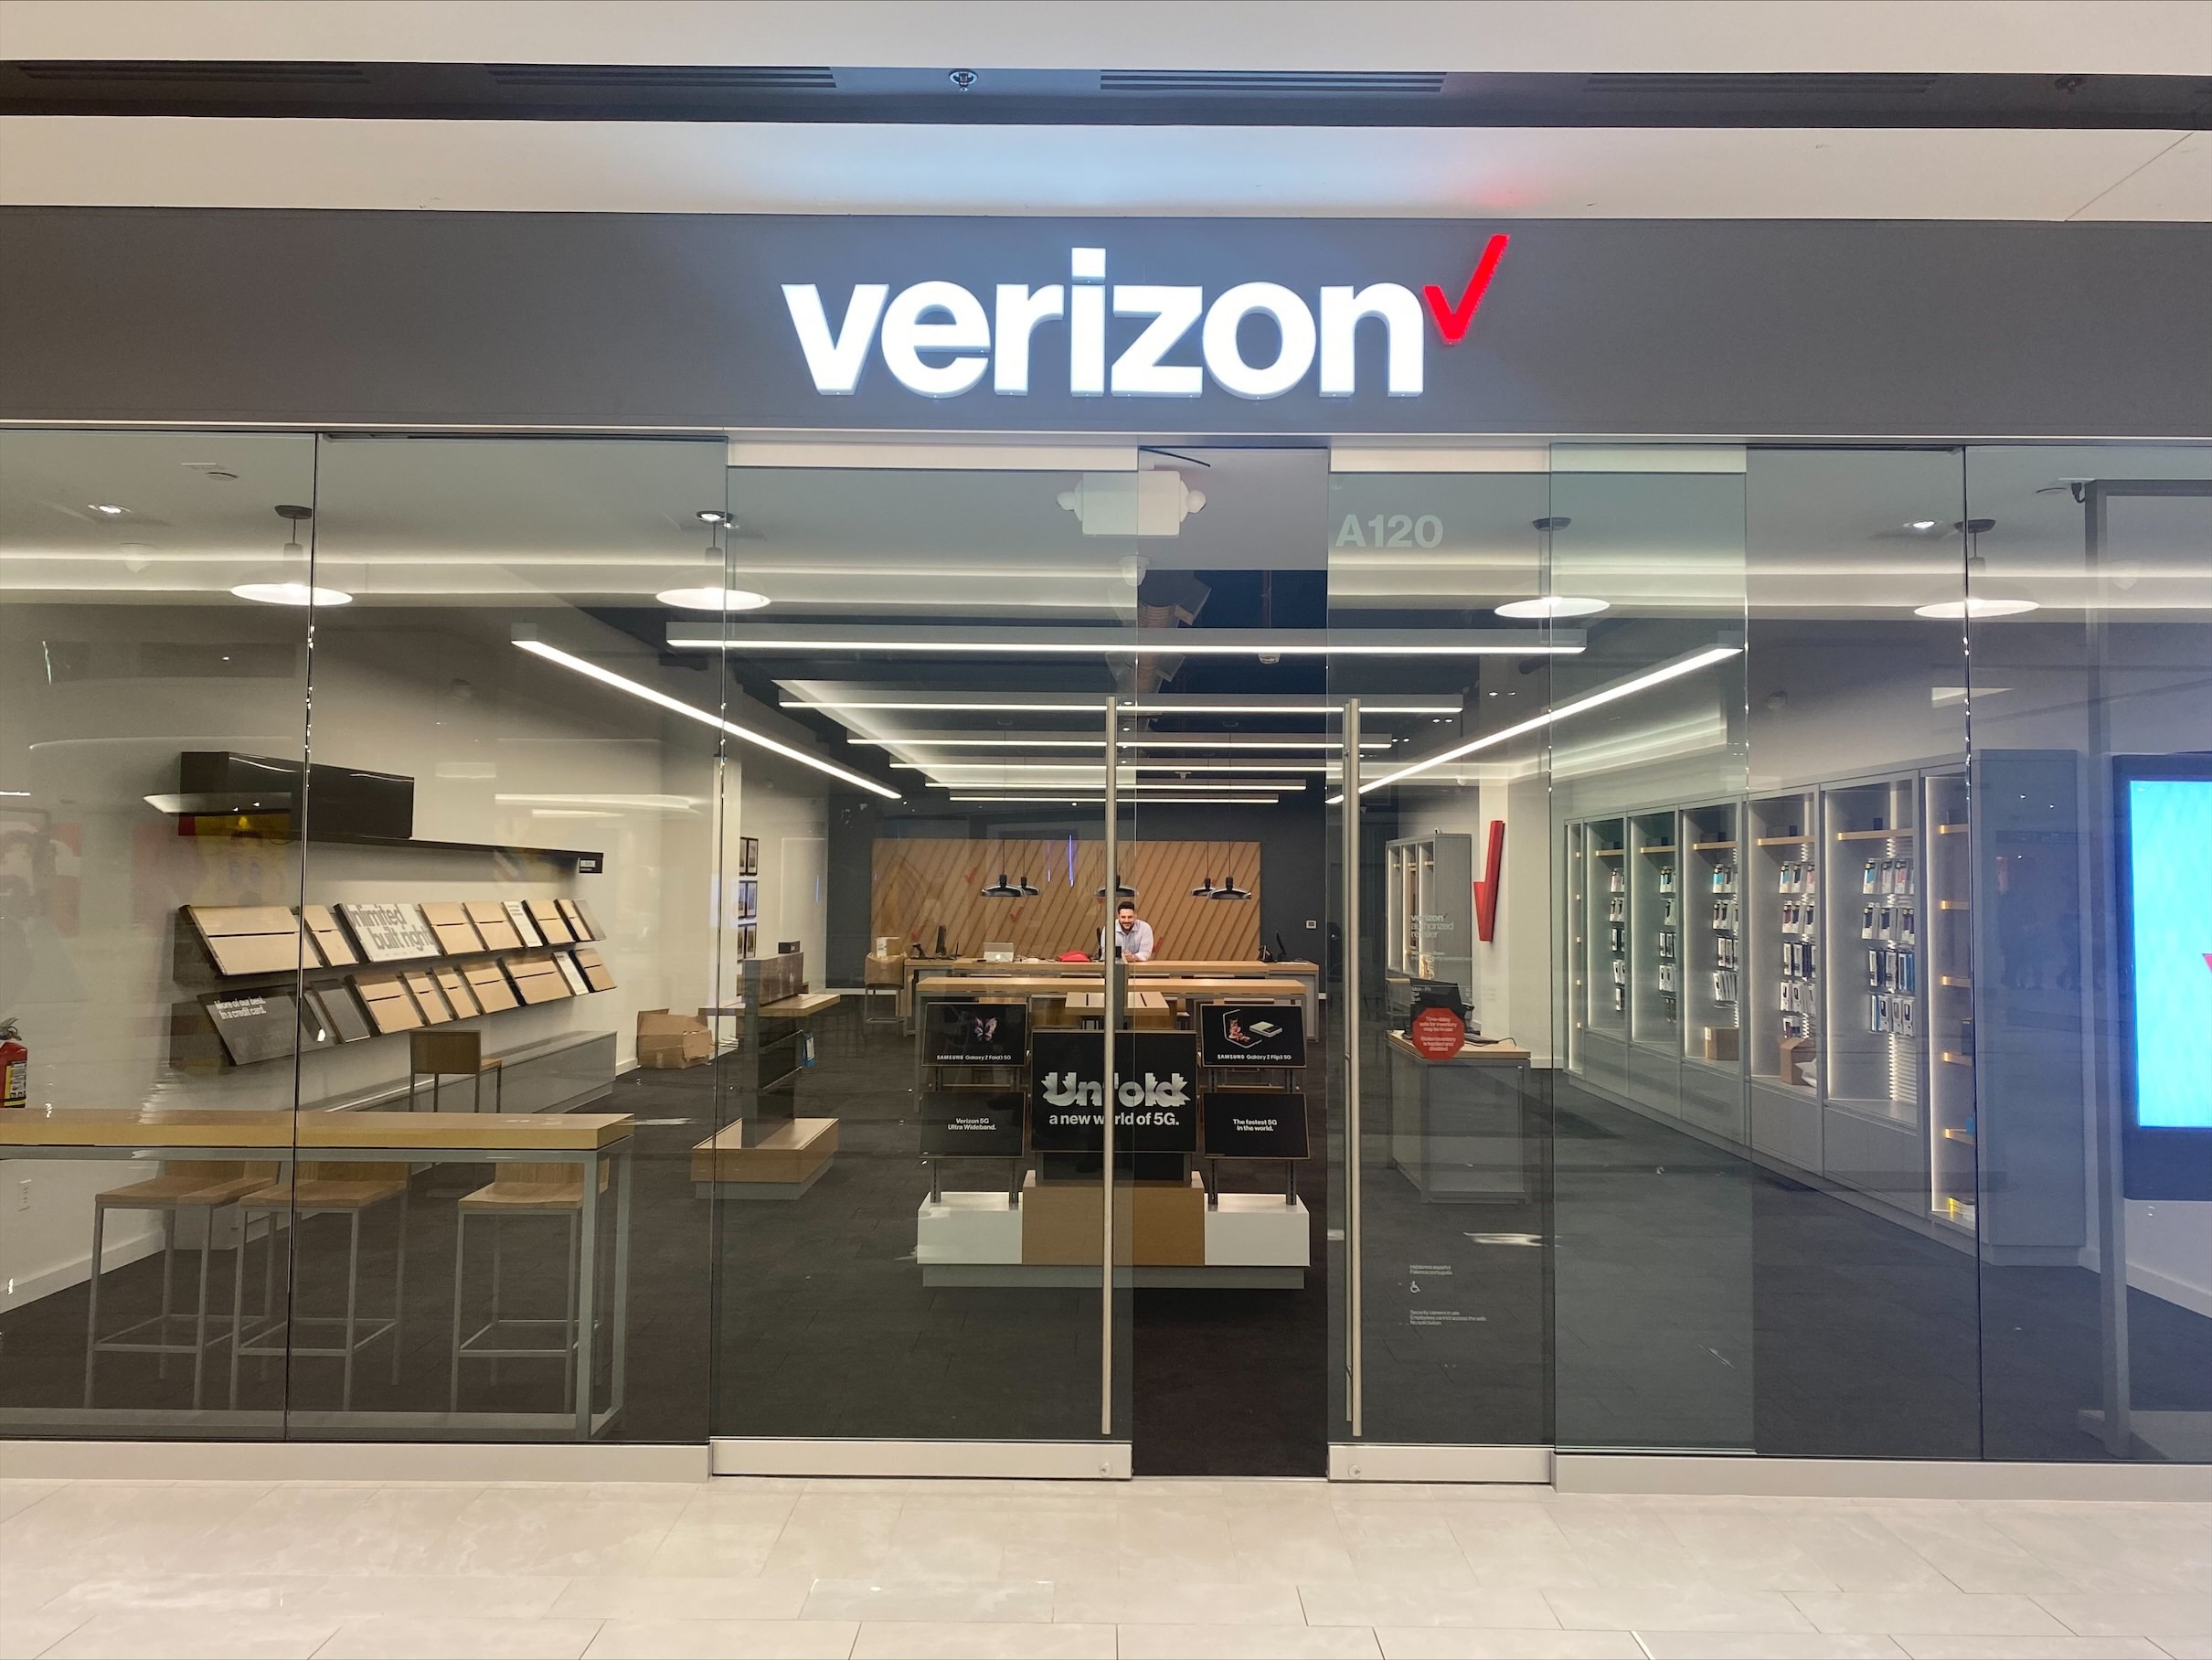 Wireless Zone, Verizon Authorized Retailer
1 American Dream Way
East Rutherford, NJ